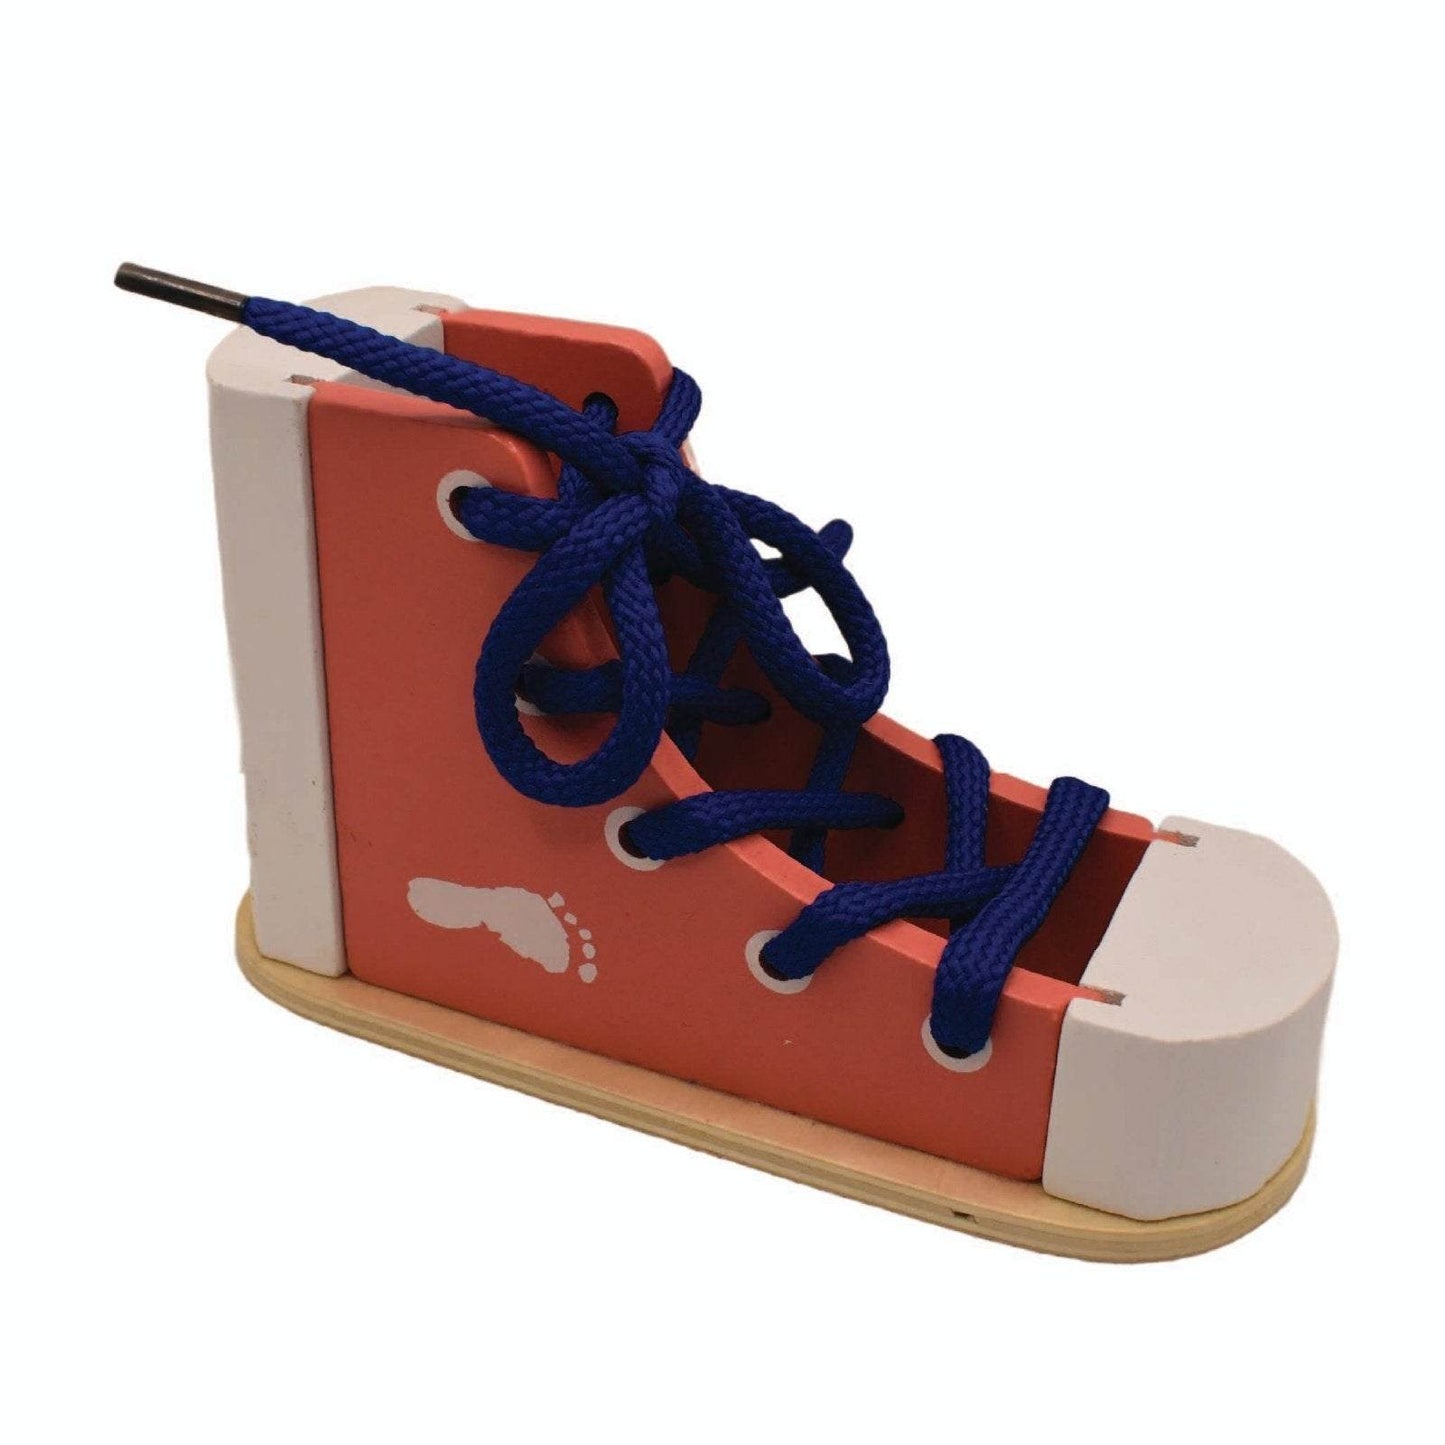 Wooden Lacing Shoe | Wooden Shoe toy